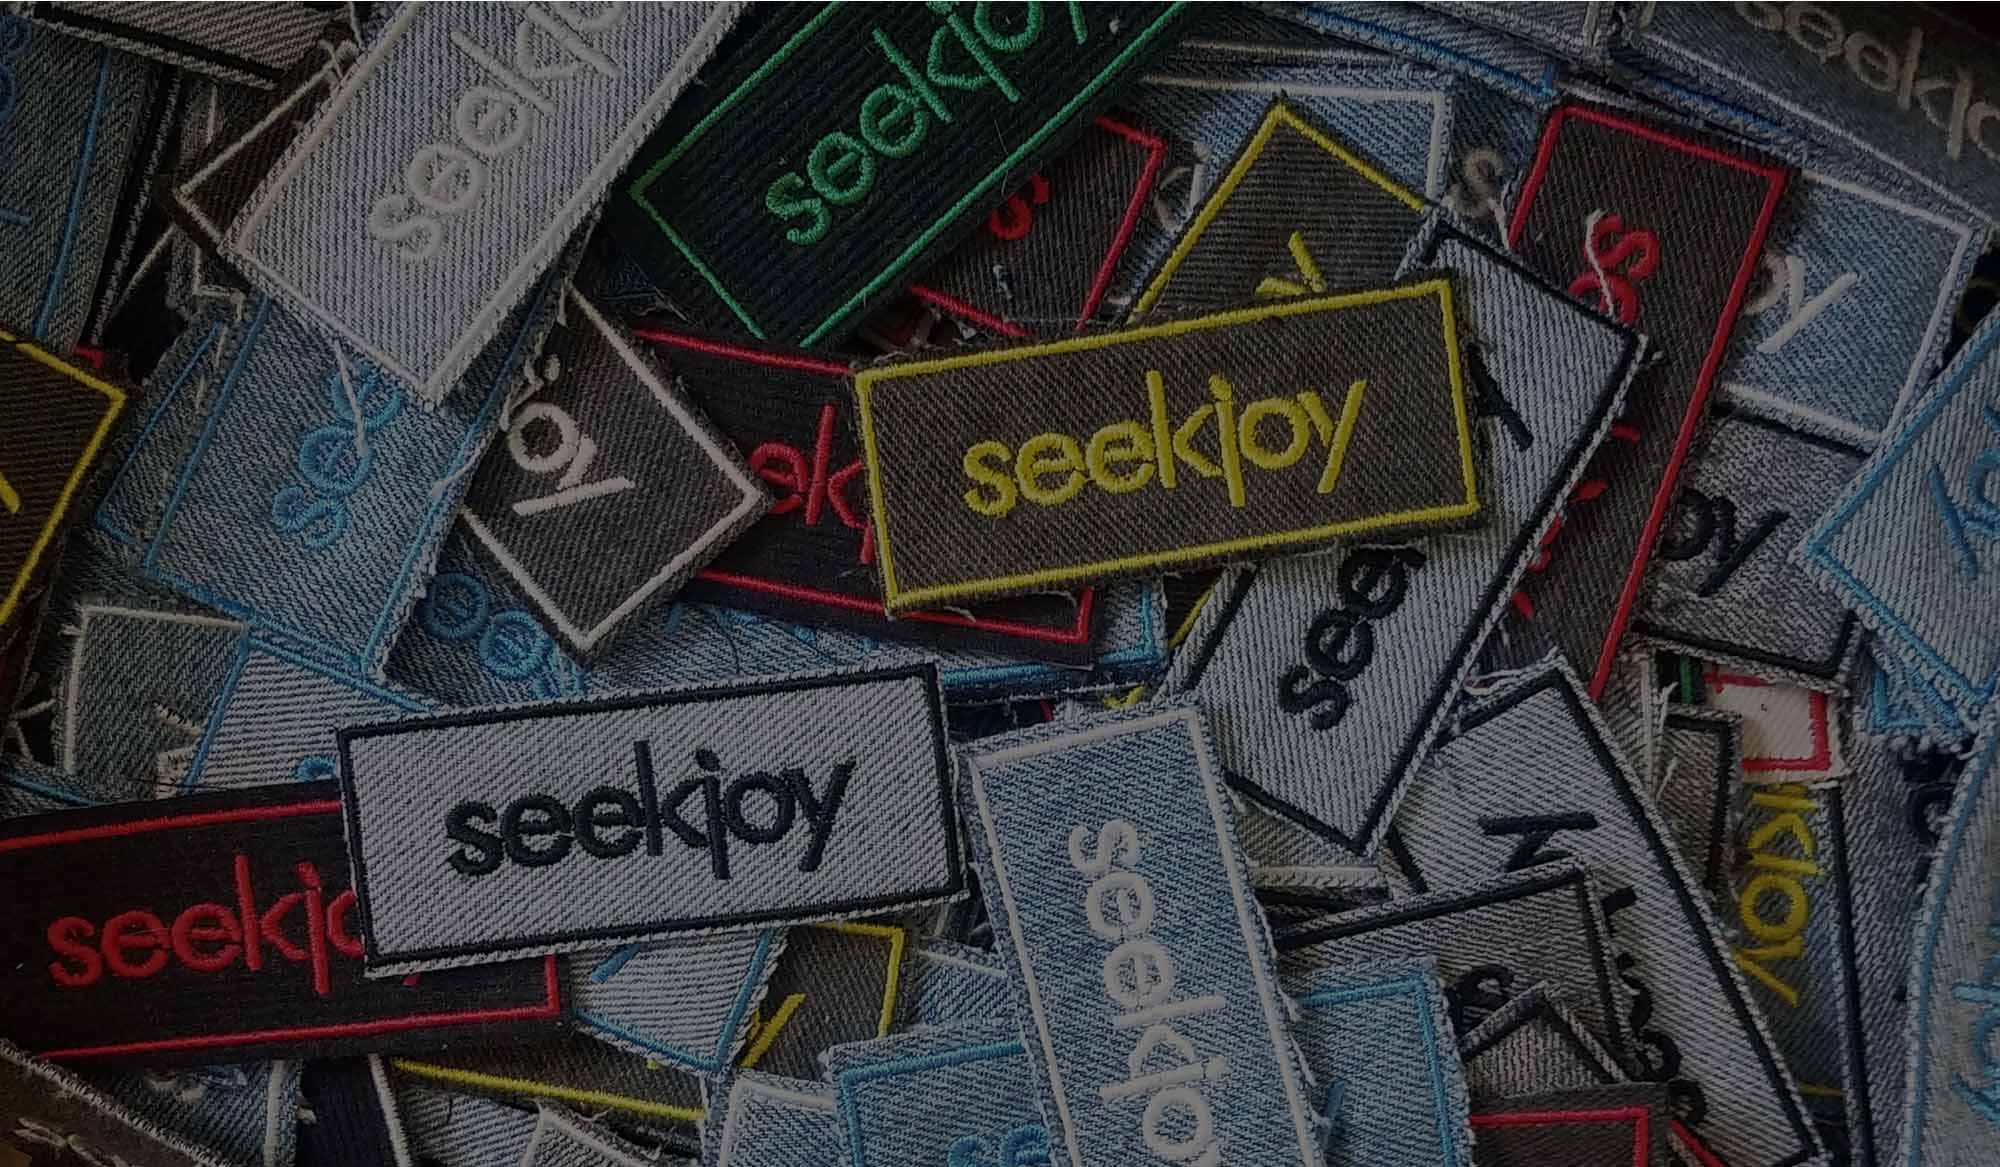 seekjoy patches